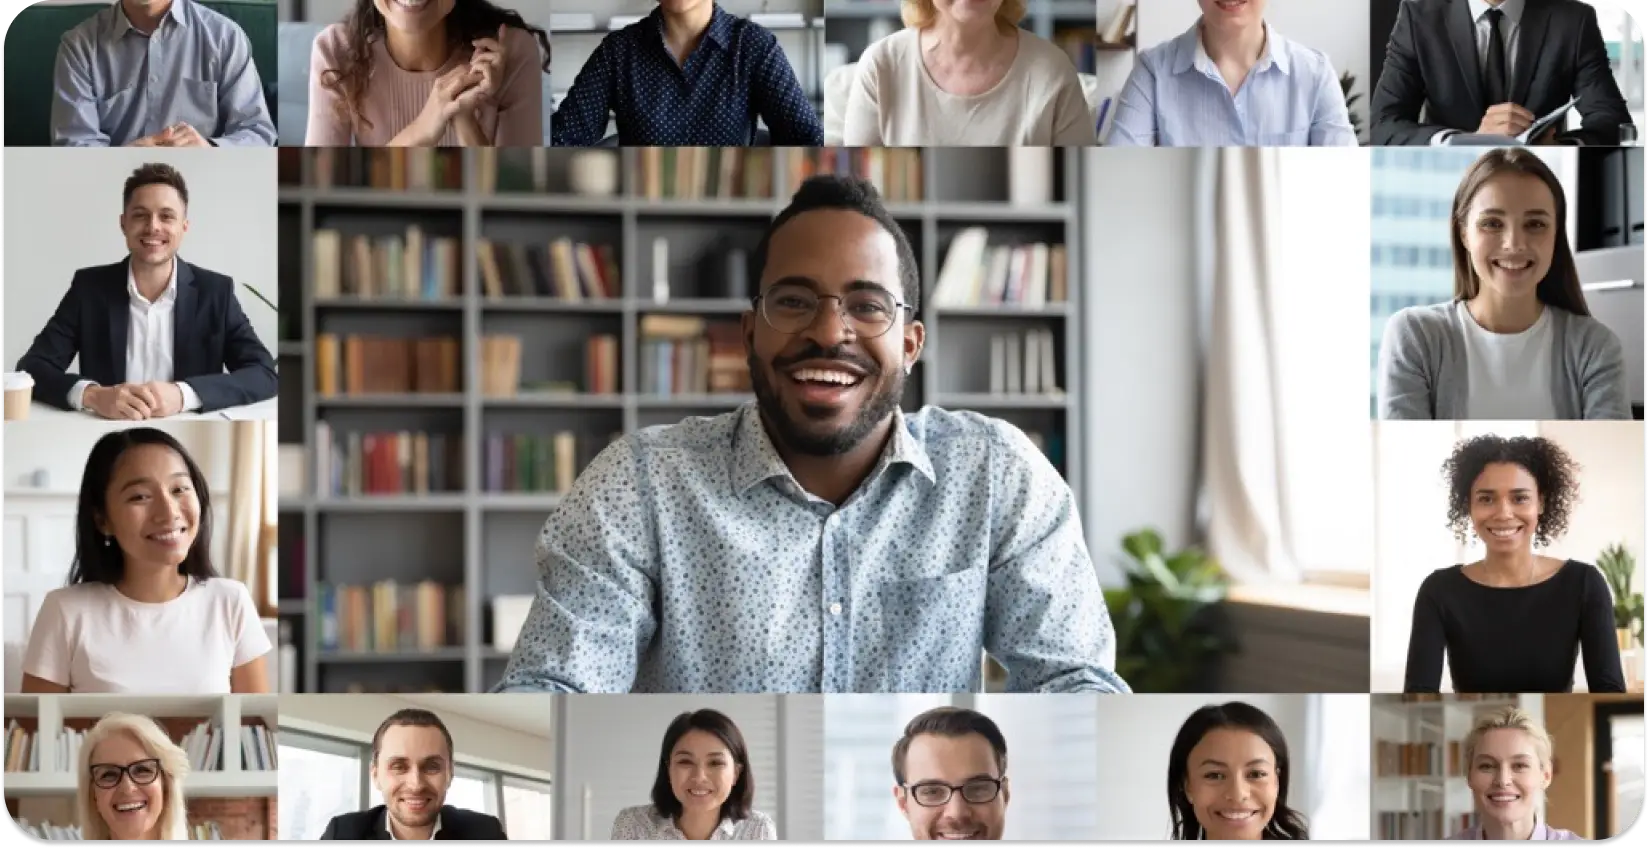 Kolaž raznovrsnih profesionalaca na virtuelnom sastanku, koji pokazuje inkluzivnost na radnom mestu.